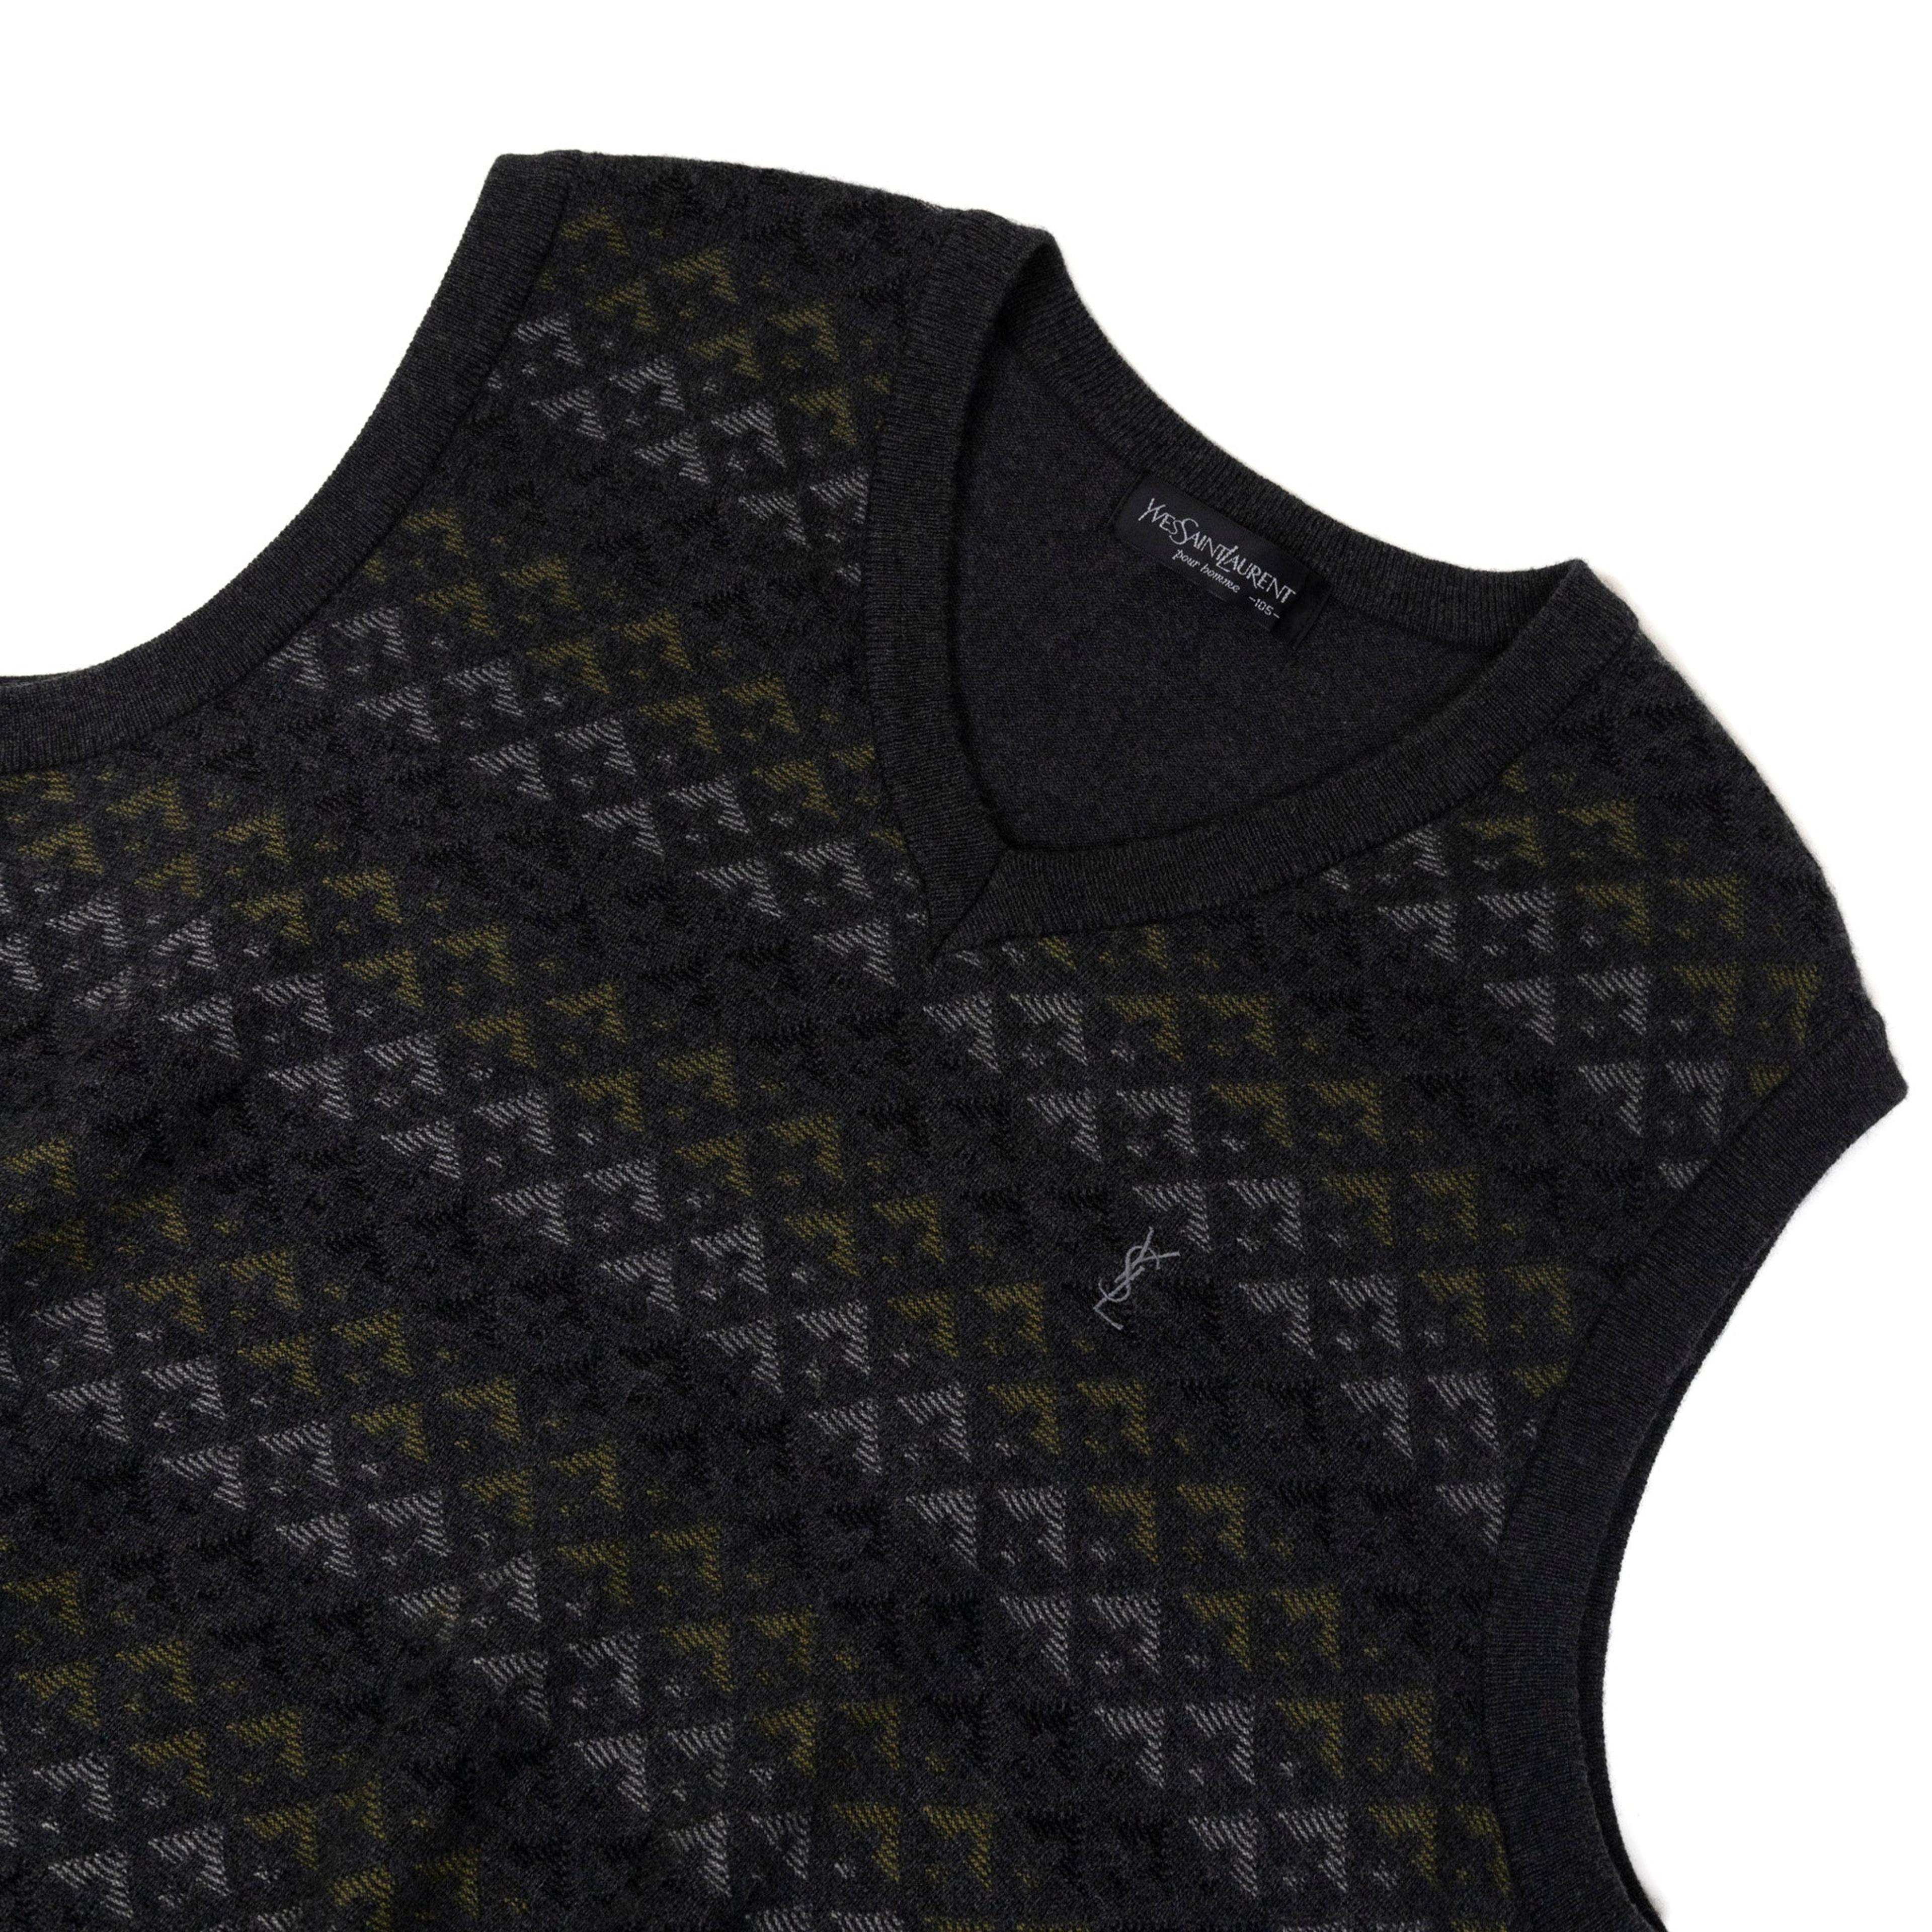 Alternate View 1 of Yves Saint Laurent Geometric Knit Sweater